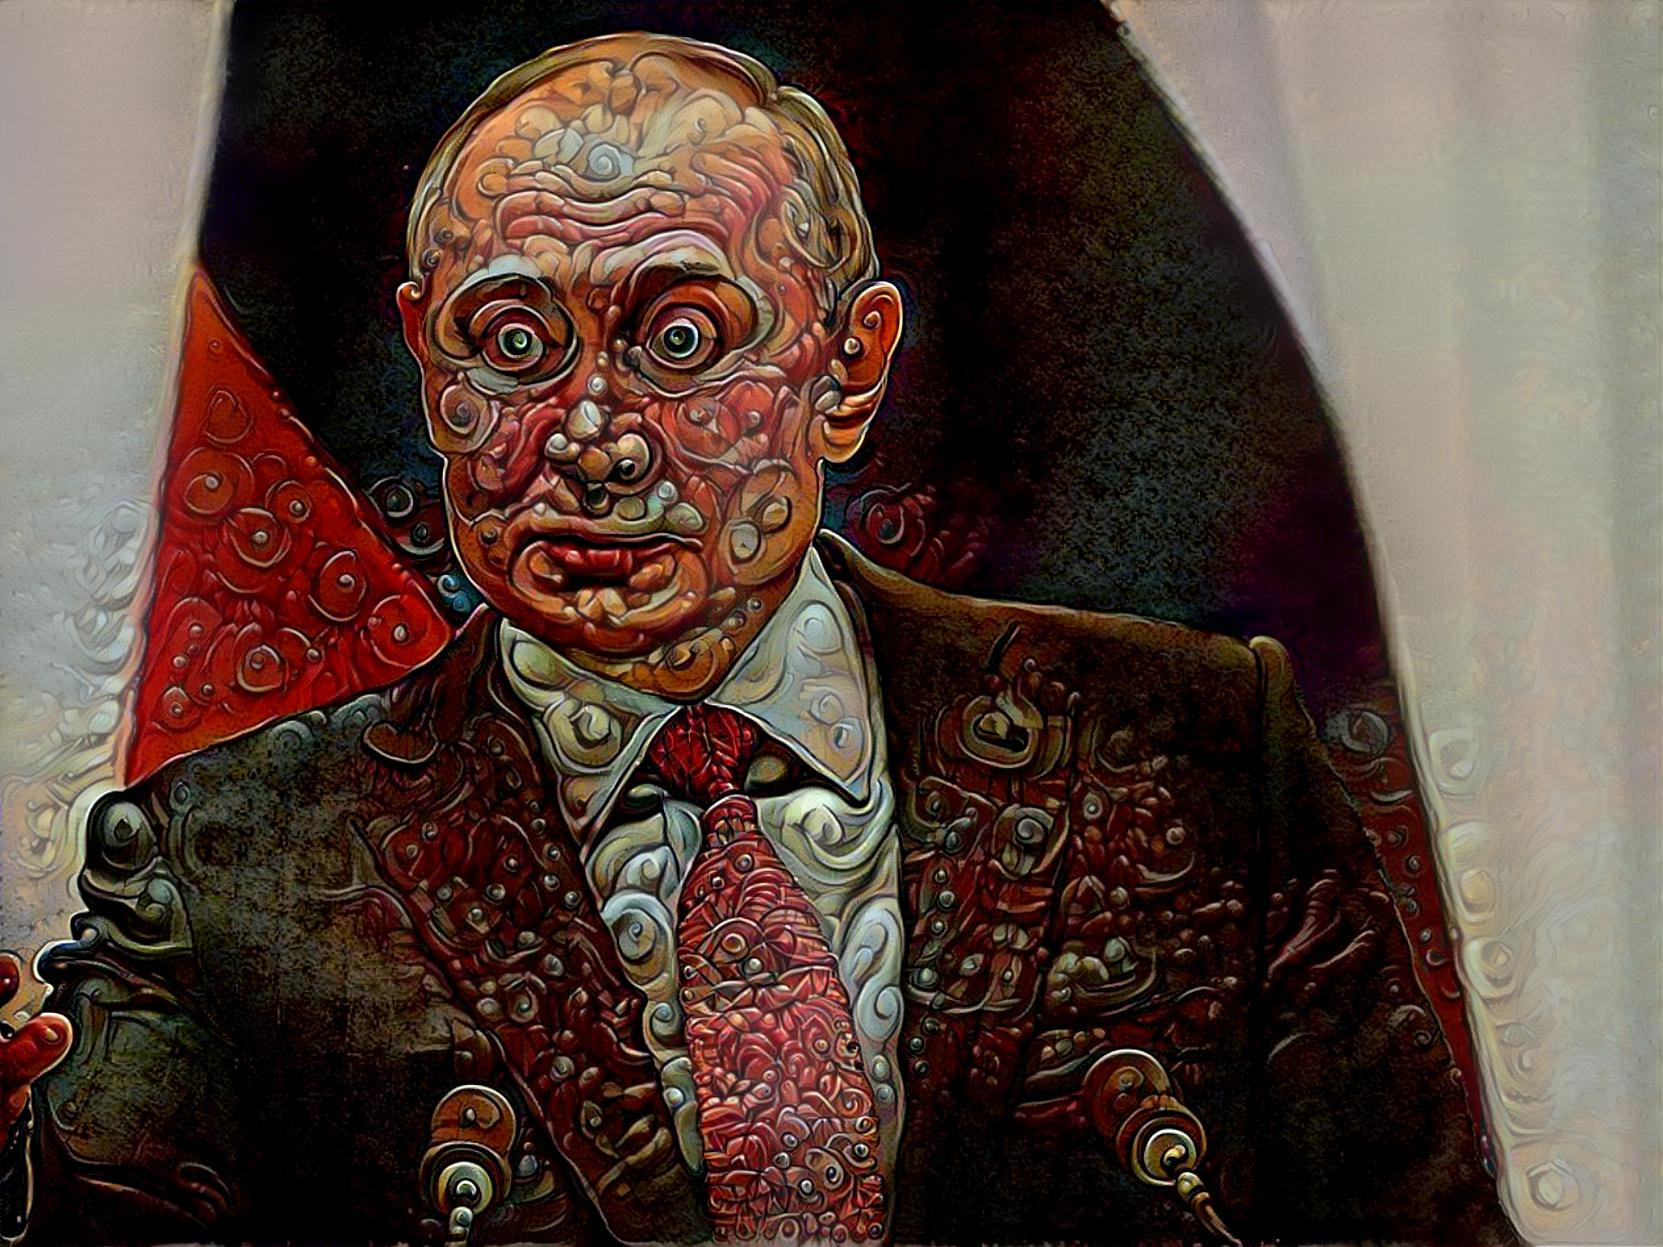 Putin II